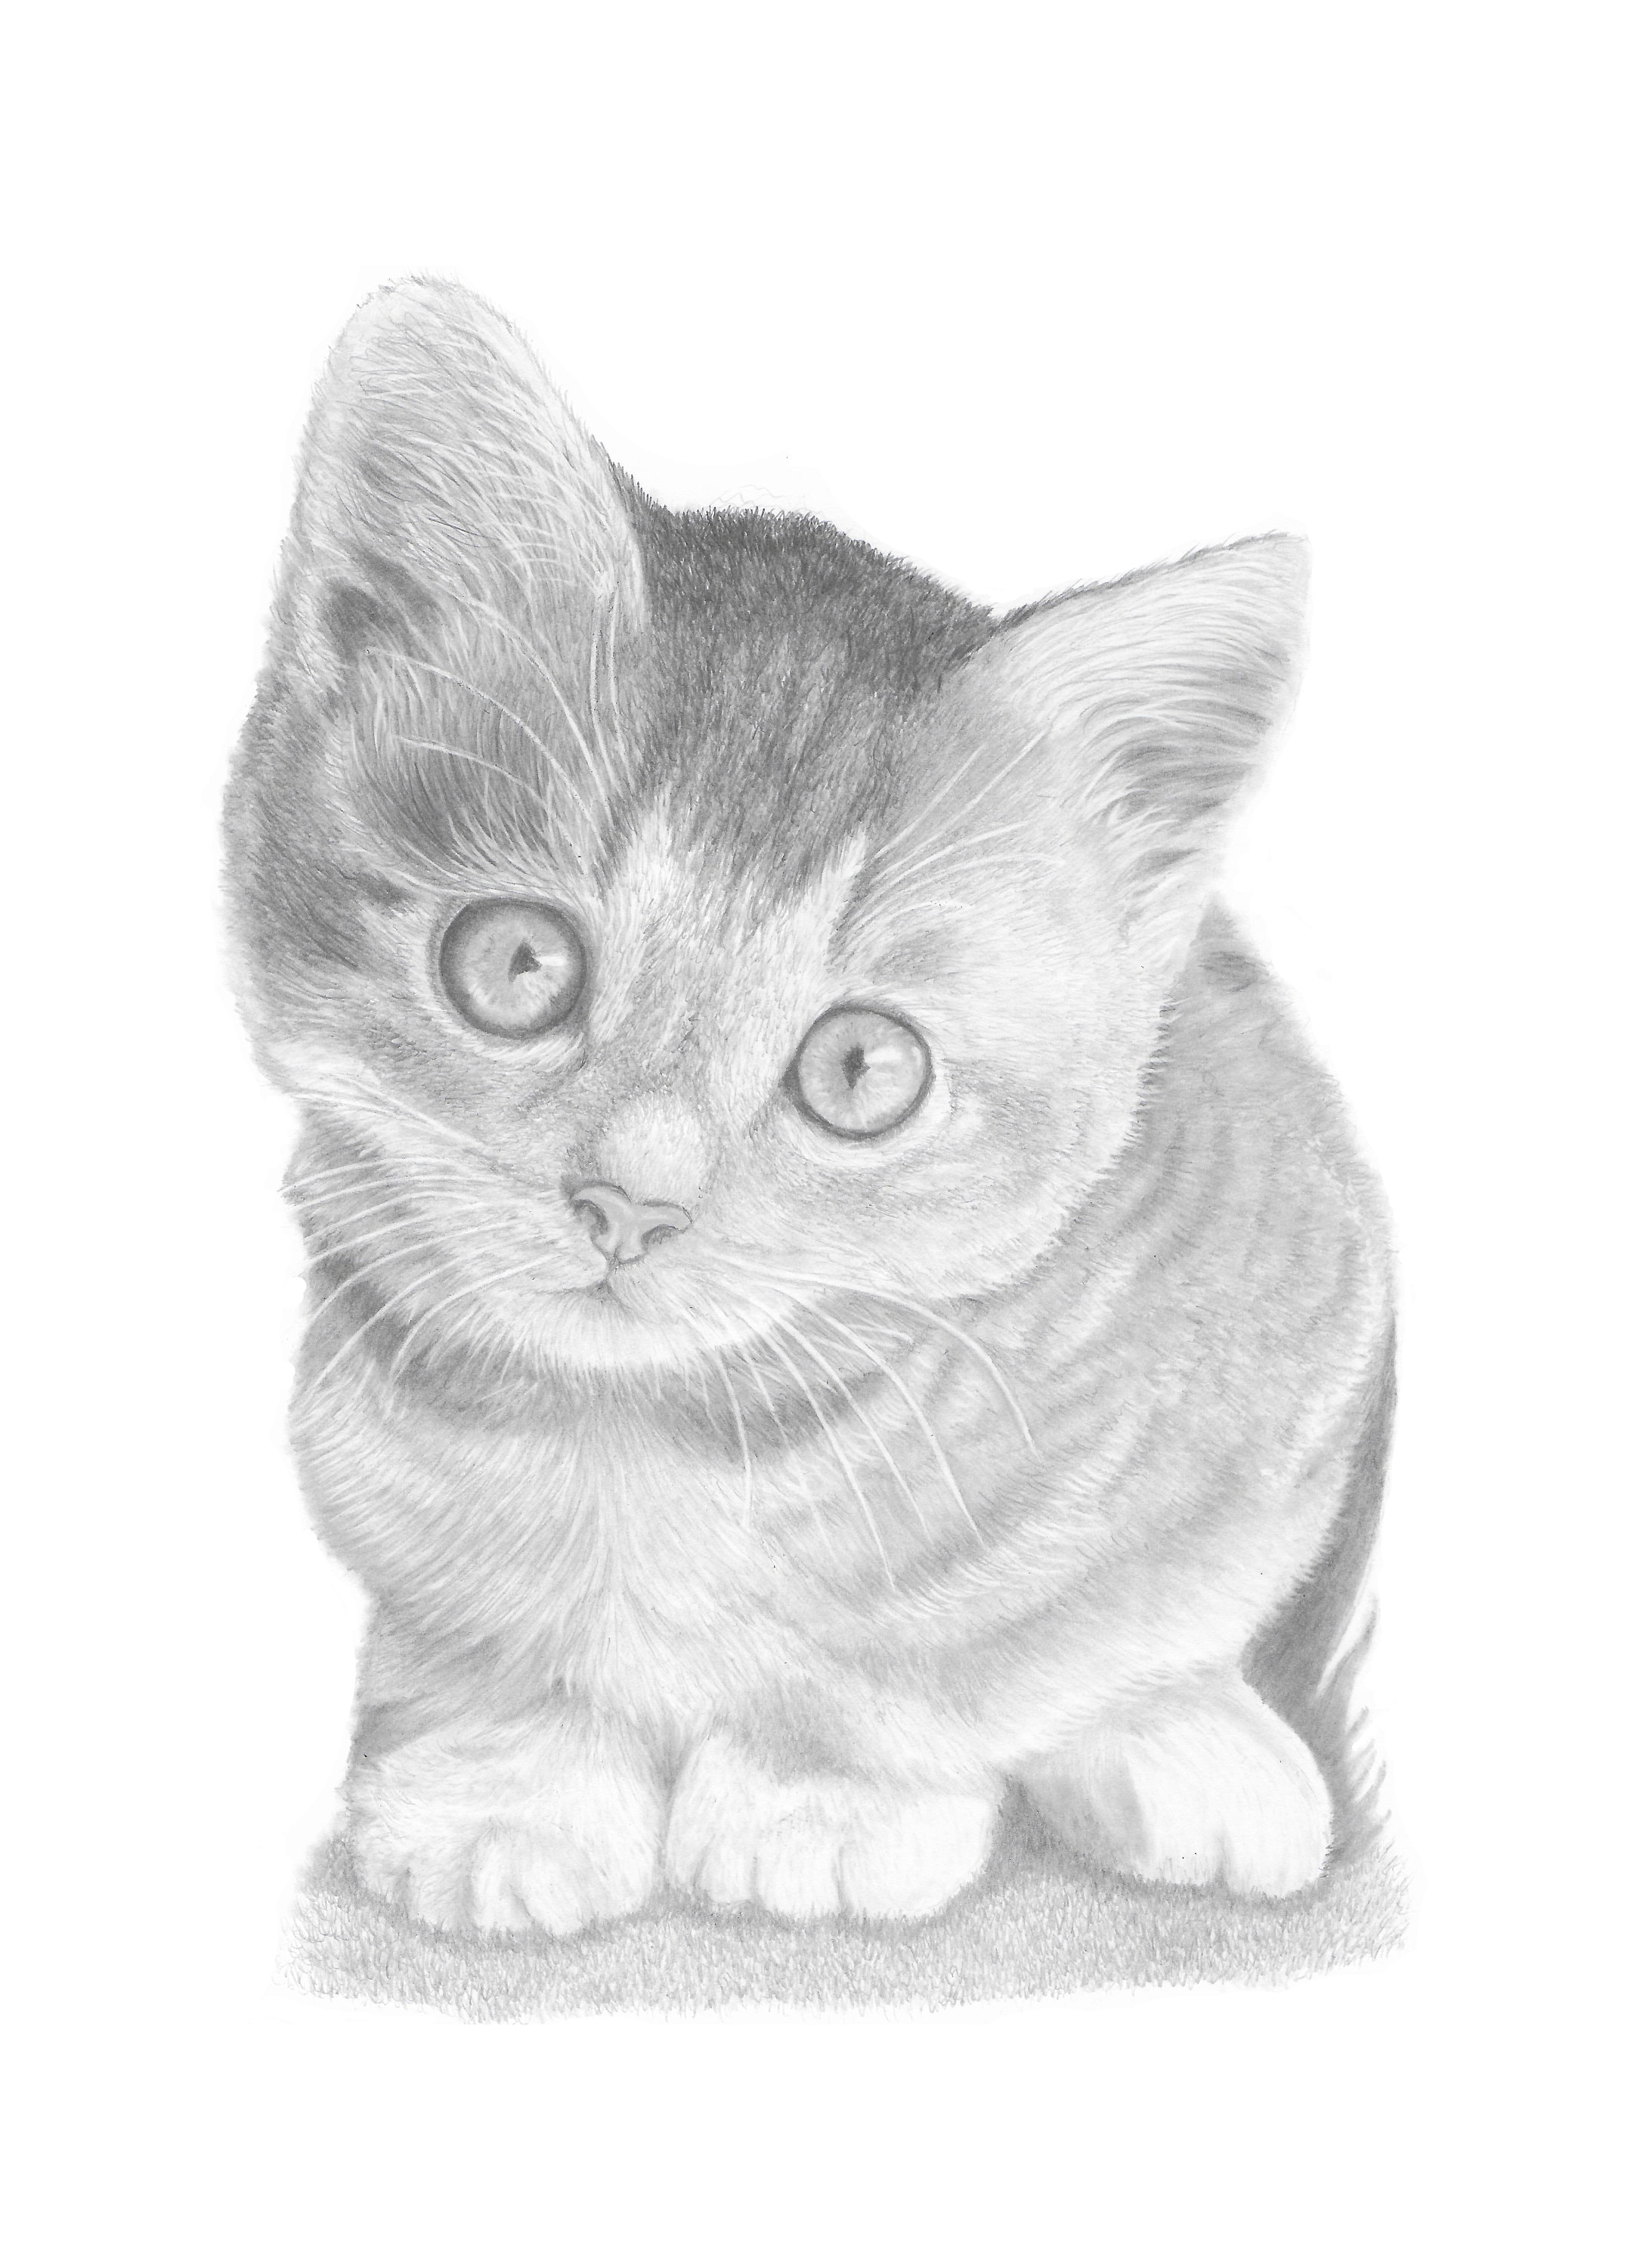 Pencil Sketch of Cute Kitten by AiArtQueen on DeviantArt